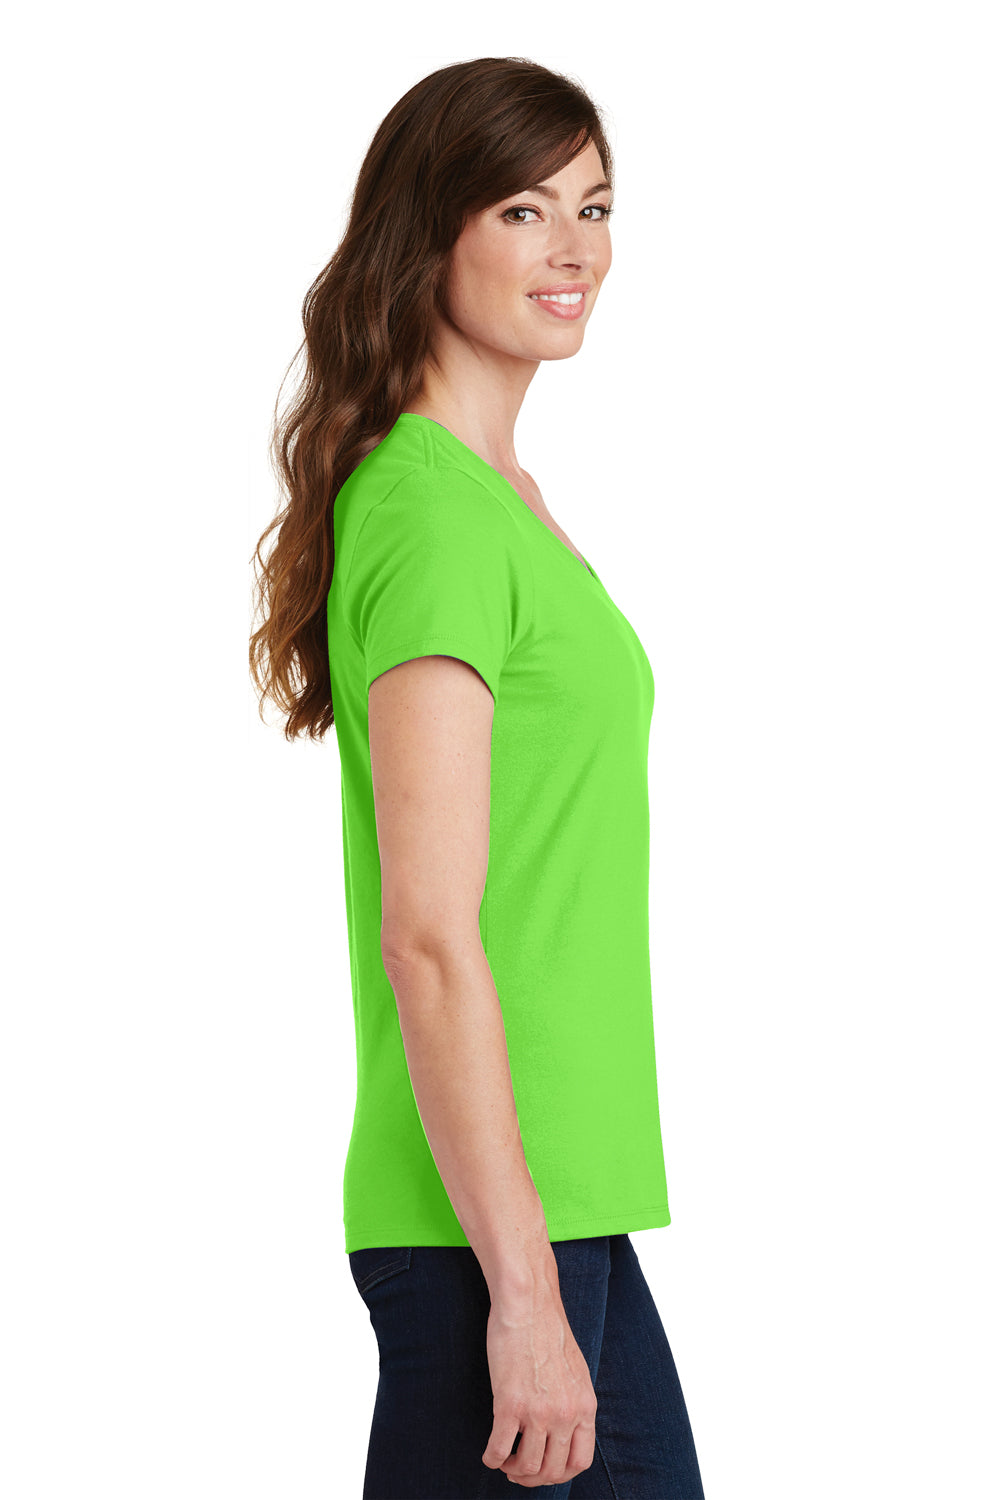 Port & Company LPC450V Womens Fan Favorite Short Sleeve V-Neck T-Shirt Flash Green Side